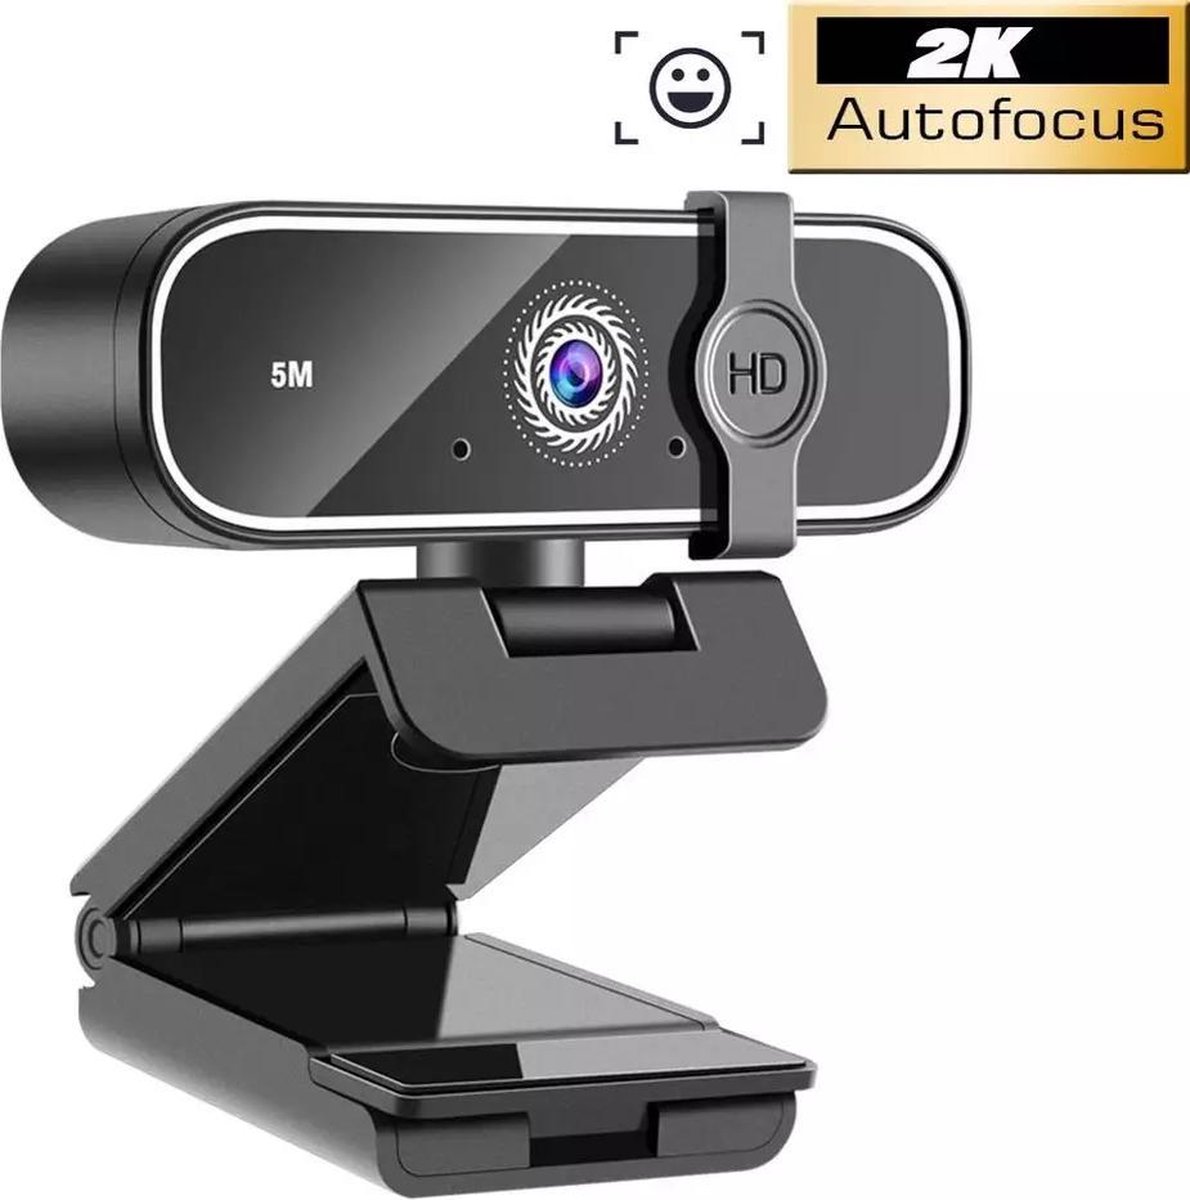 Missan: Webcam 4K FULL HD Met Cover Hoog Kwaliteit Camera Usb / Professioneel AUTOFOCUS Webcam / StreamCam / Webcam voor pc met USB / Camera voor vergadering / Windows en Apple Mac / Meeting / Skype / Facetime / Zoom / Twitch